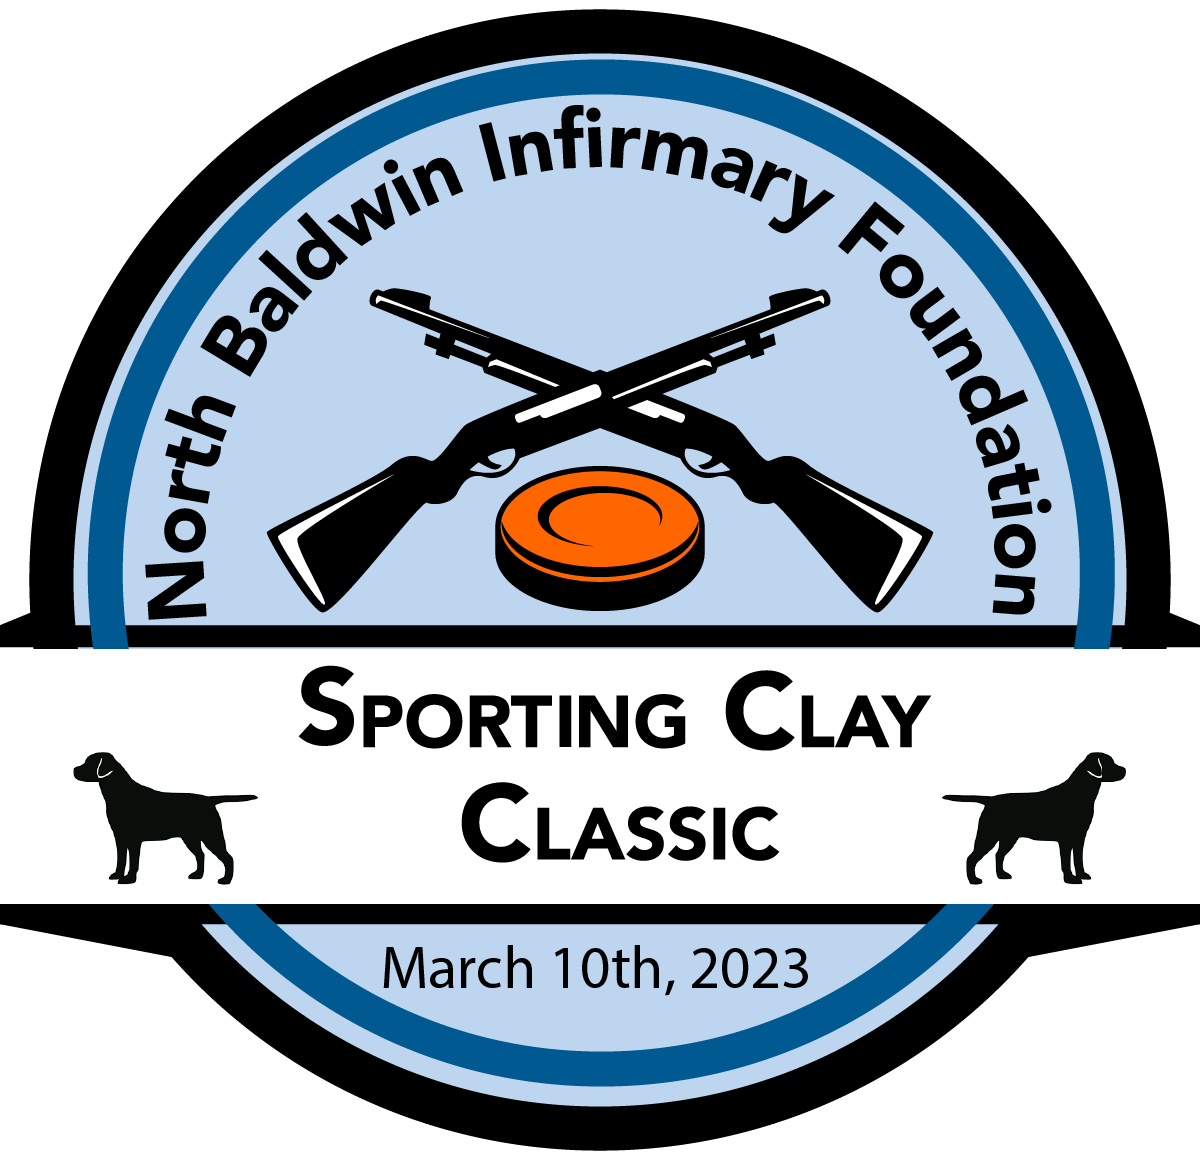 North Baldwin Infirmary Sporting Clay Classic logo 2023